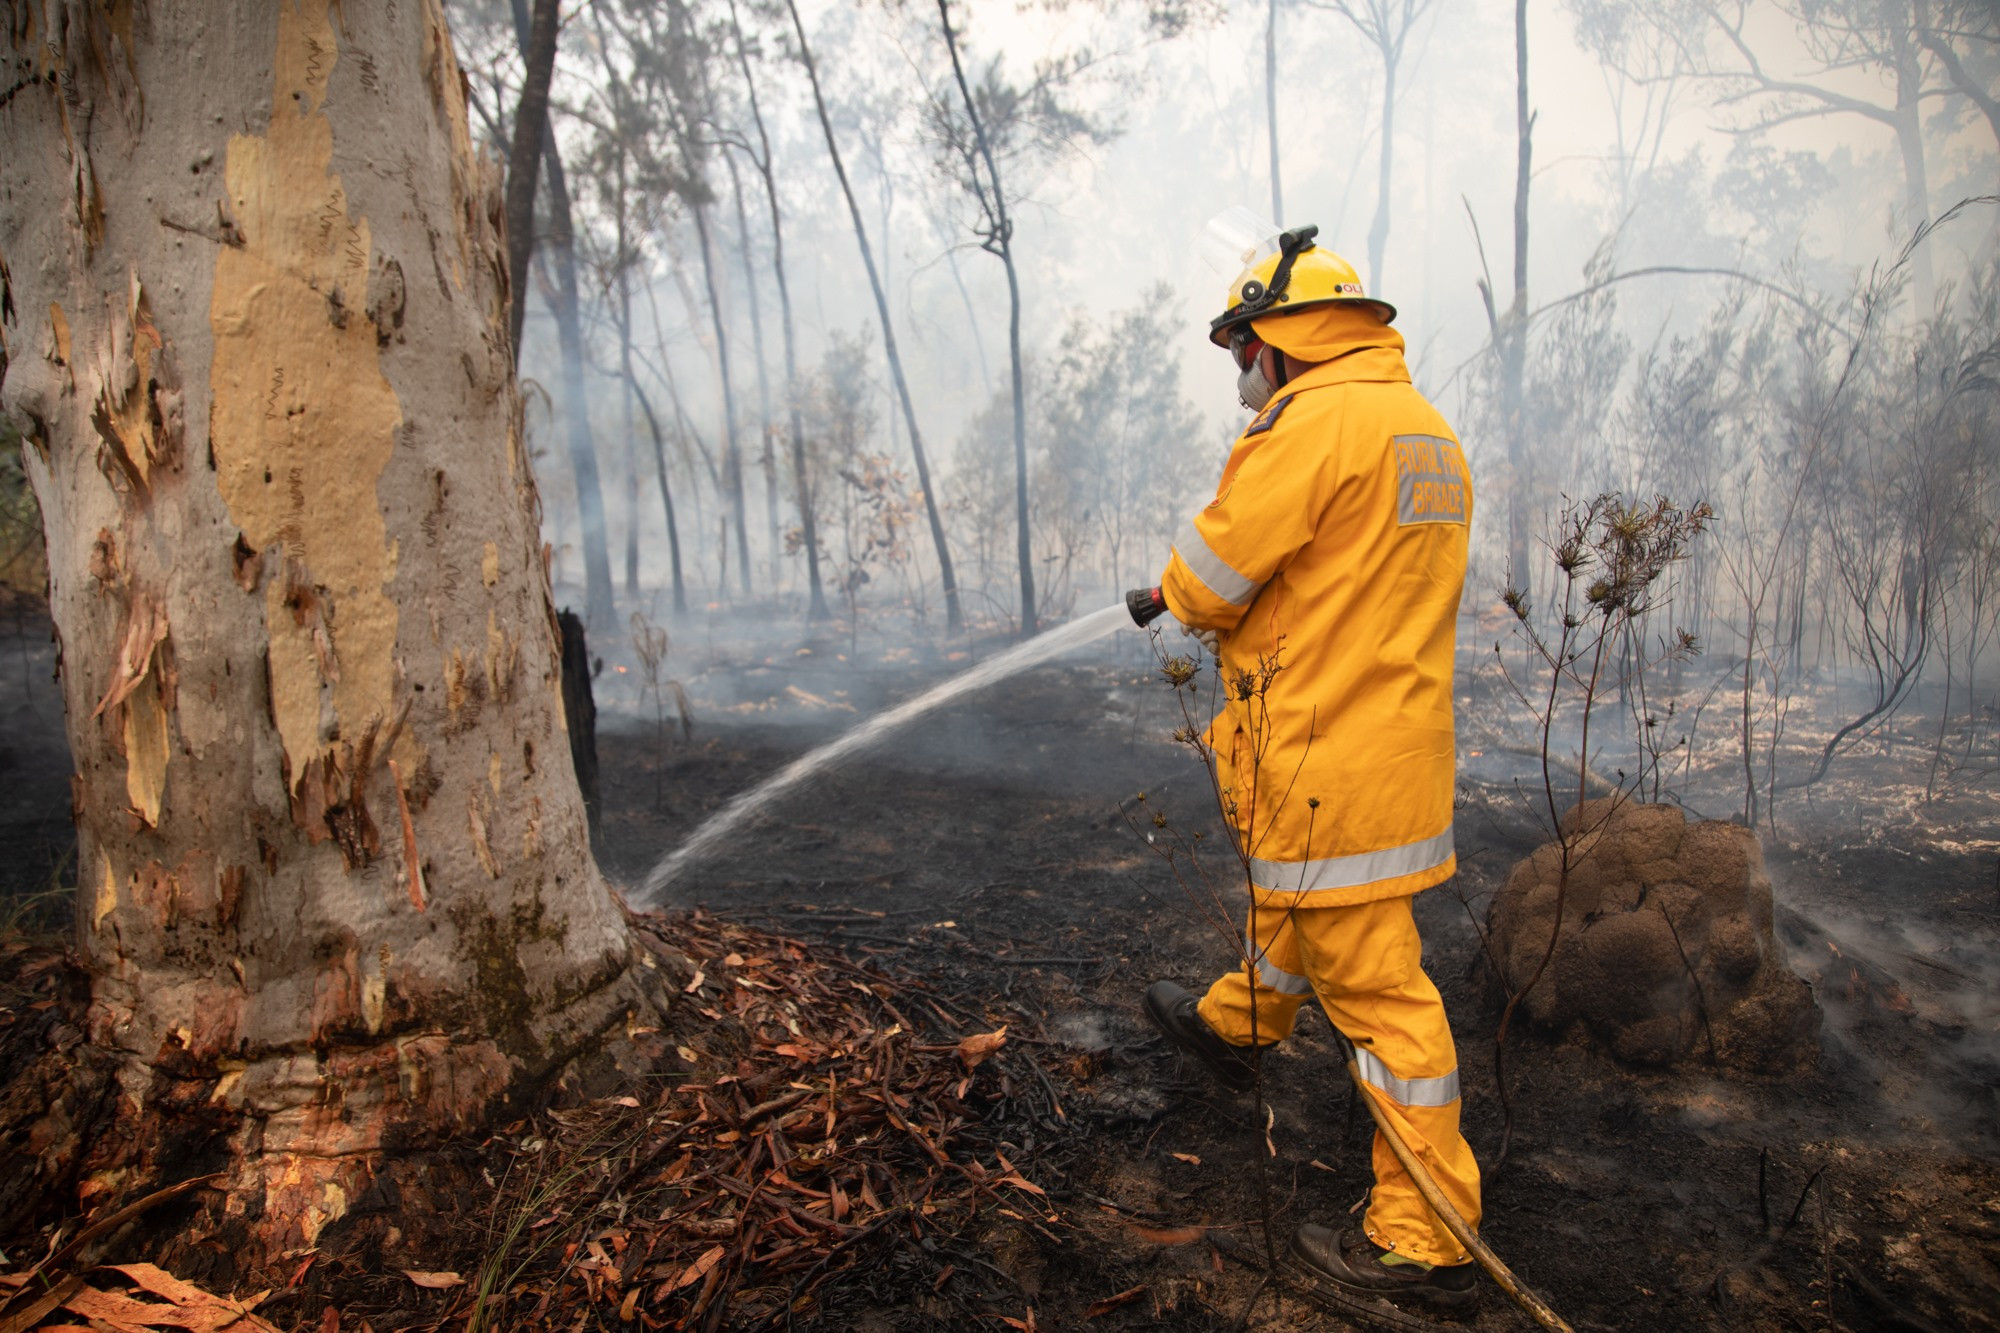 Bushfire in Irvinebank, south west of Herberton. - feature photo